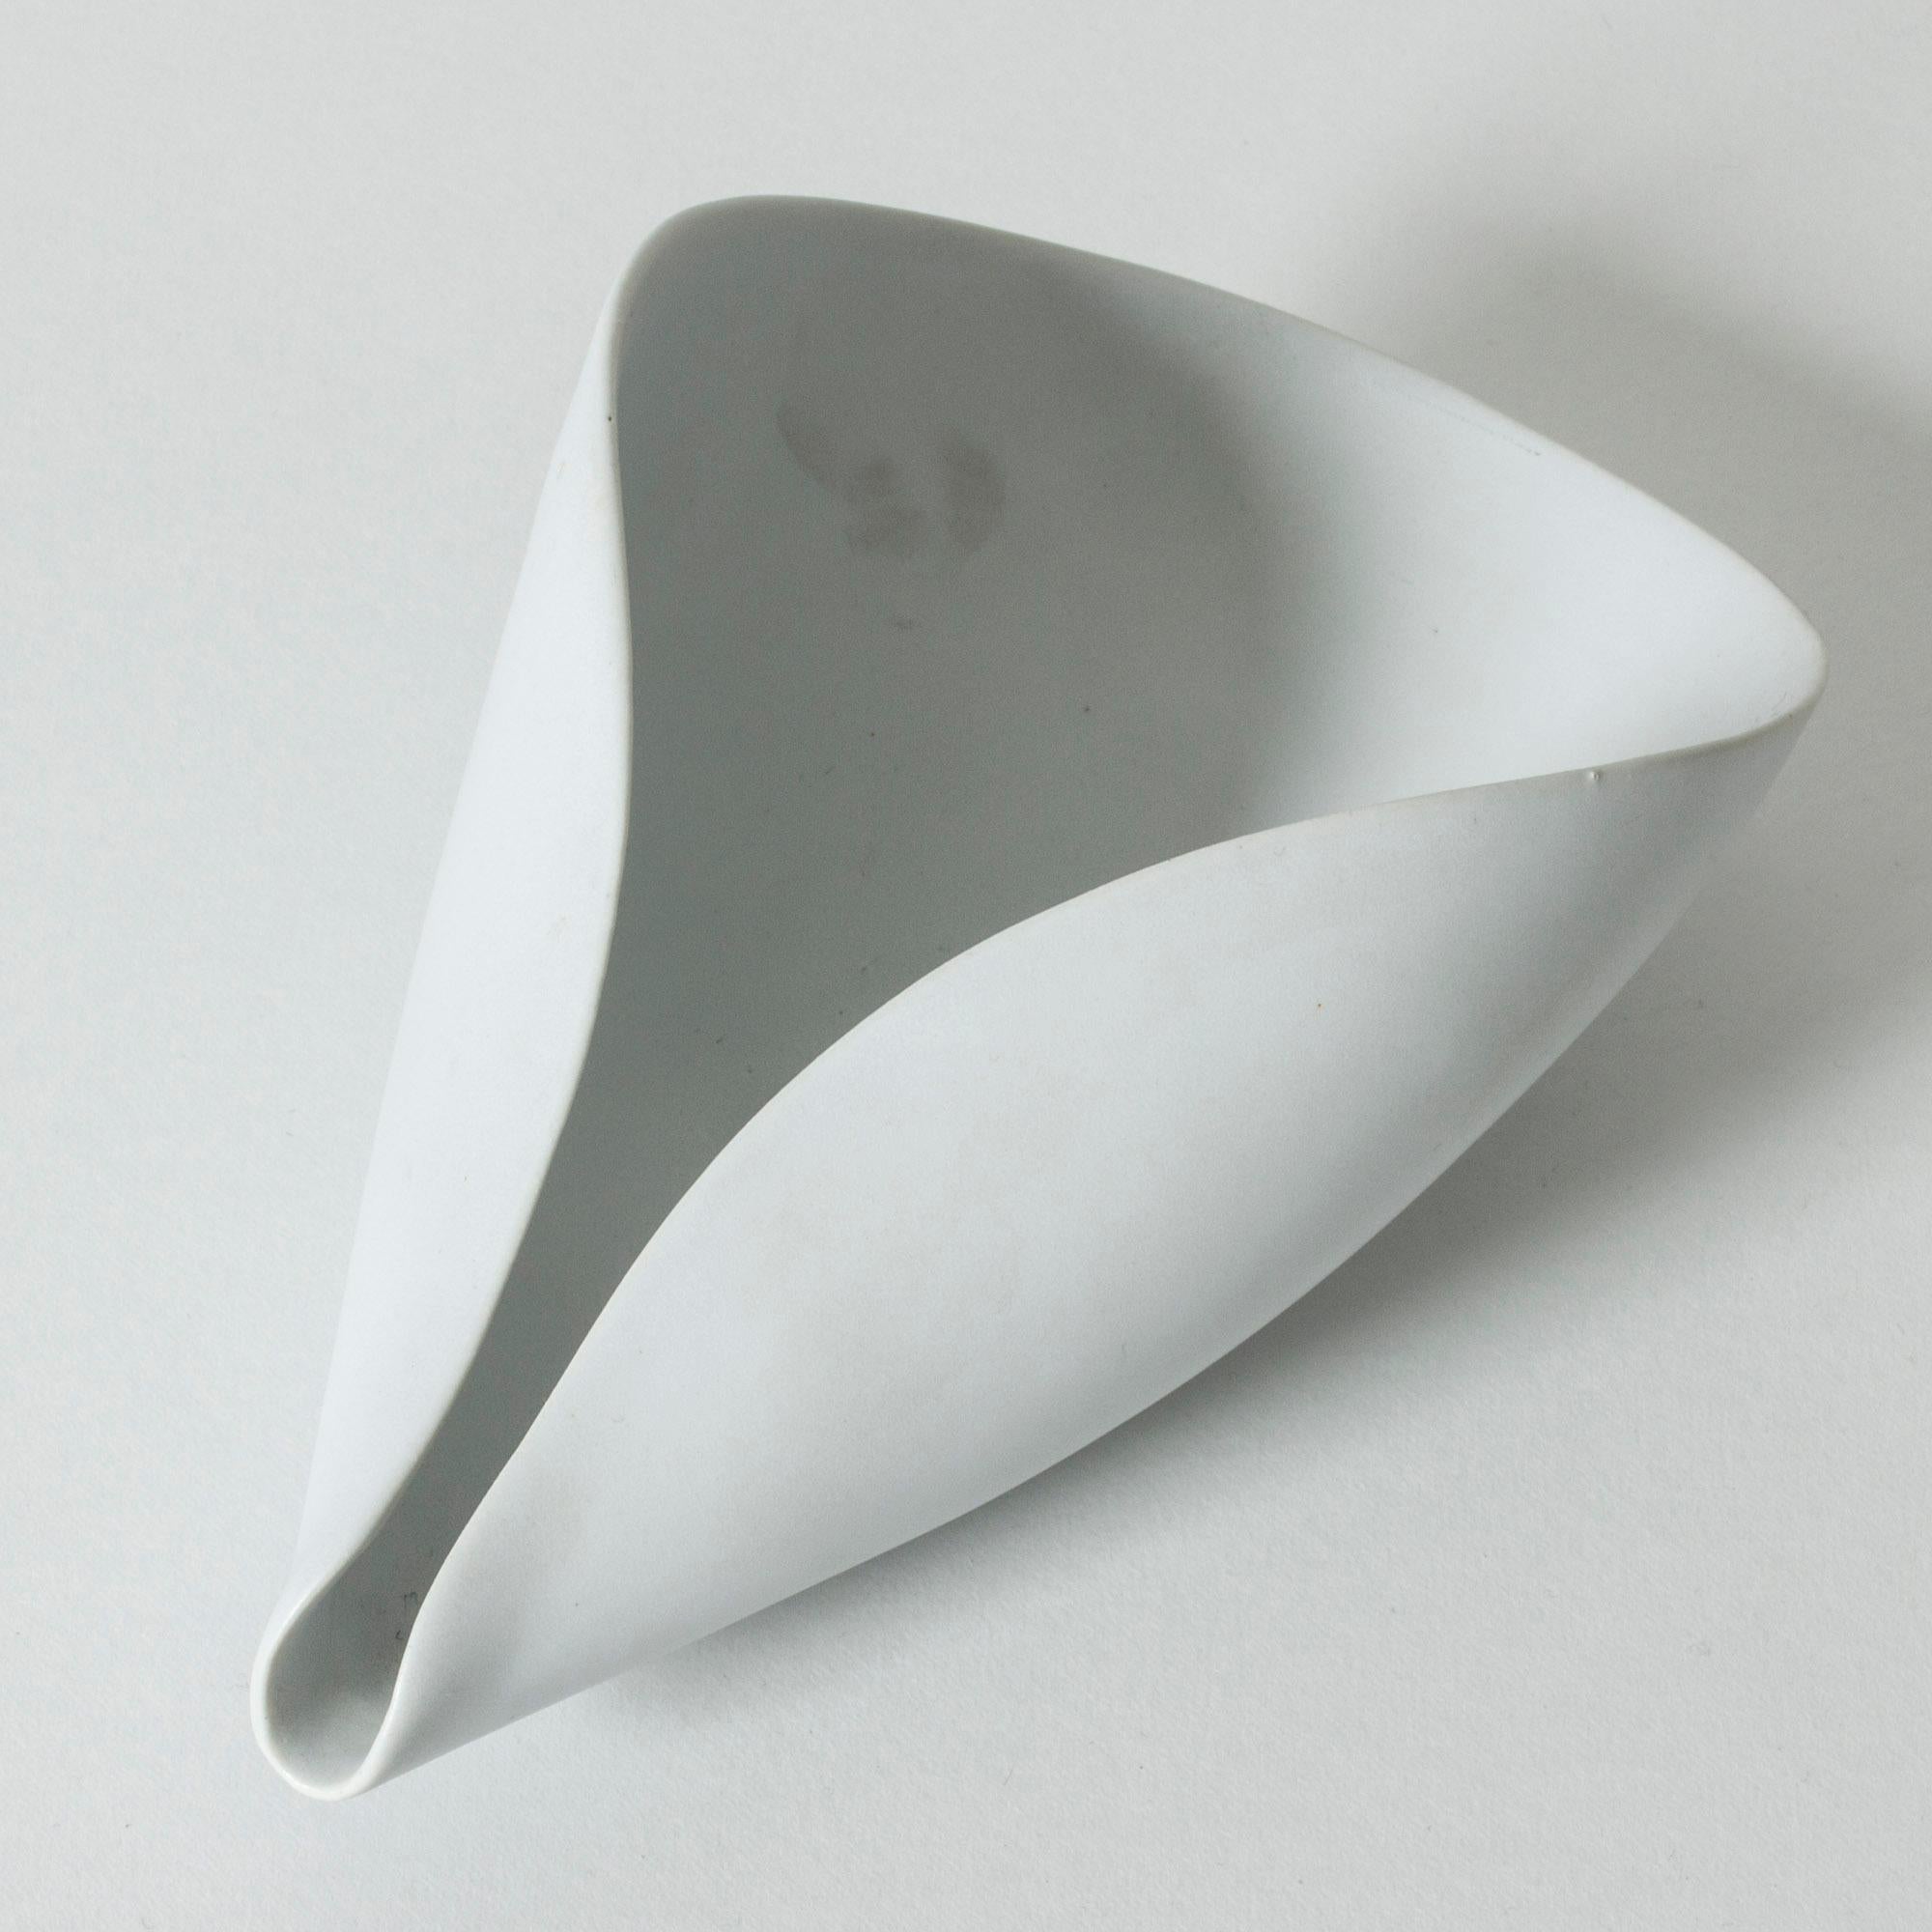 Beautiful “Veckla” bowl by Stig Lindberg, in an elegantly folded, streamlined design. Smooth, white carrara stoneware.